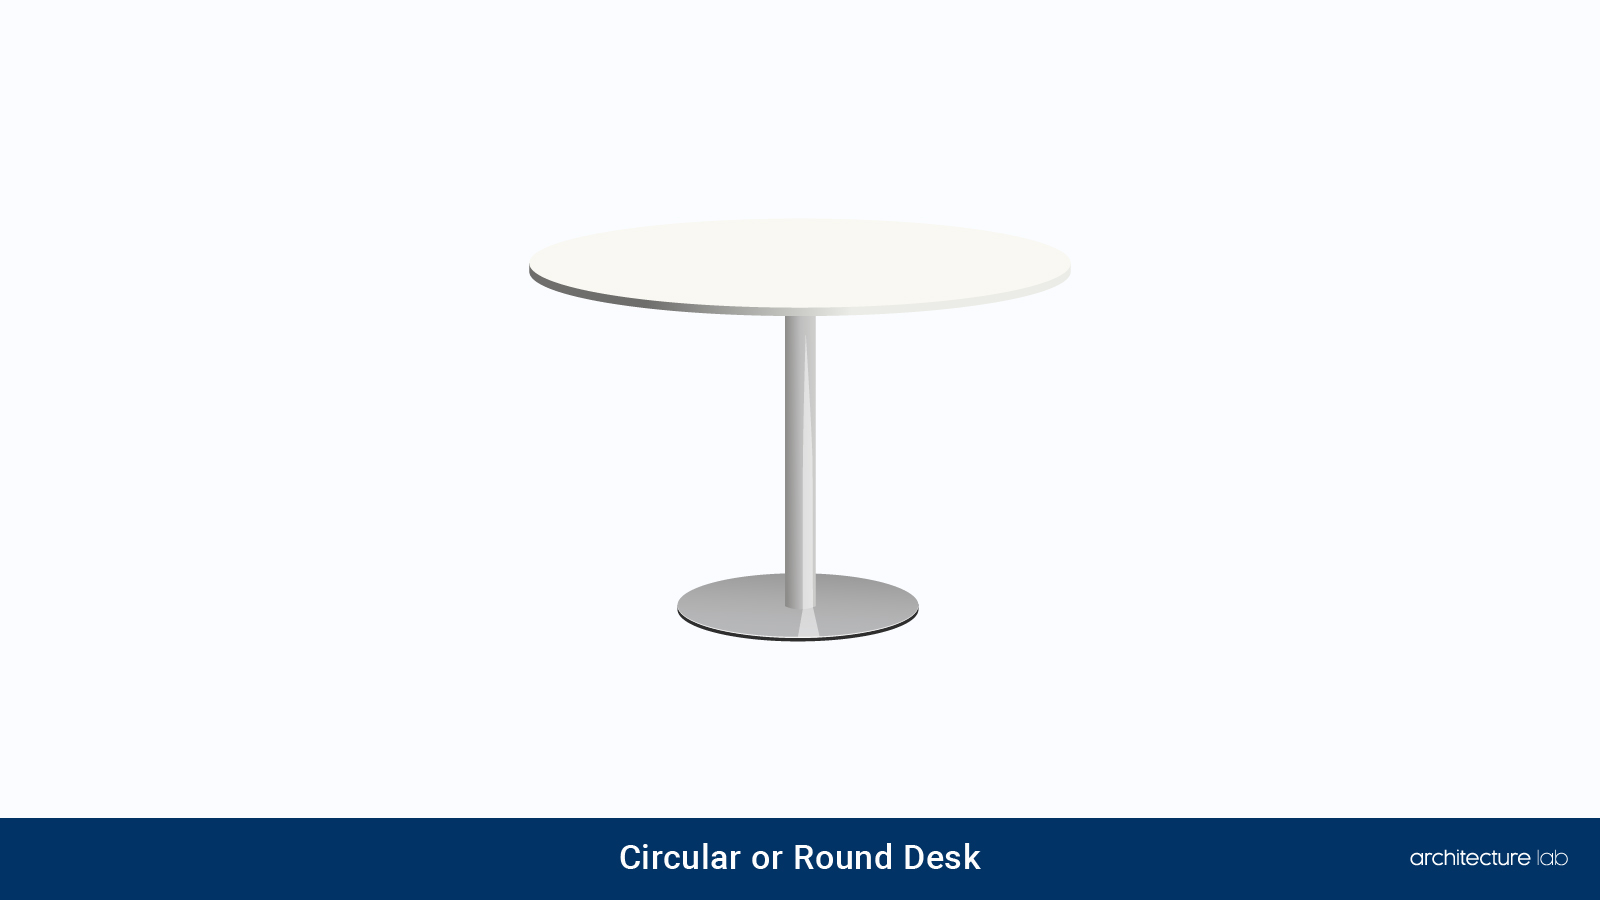 21. Circular or round desk